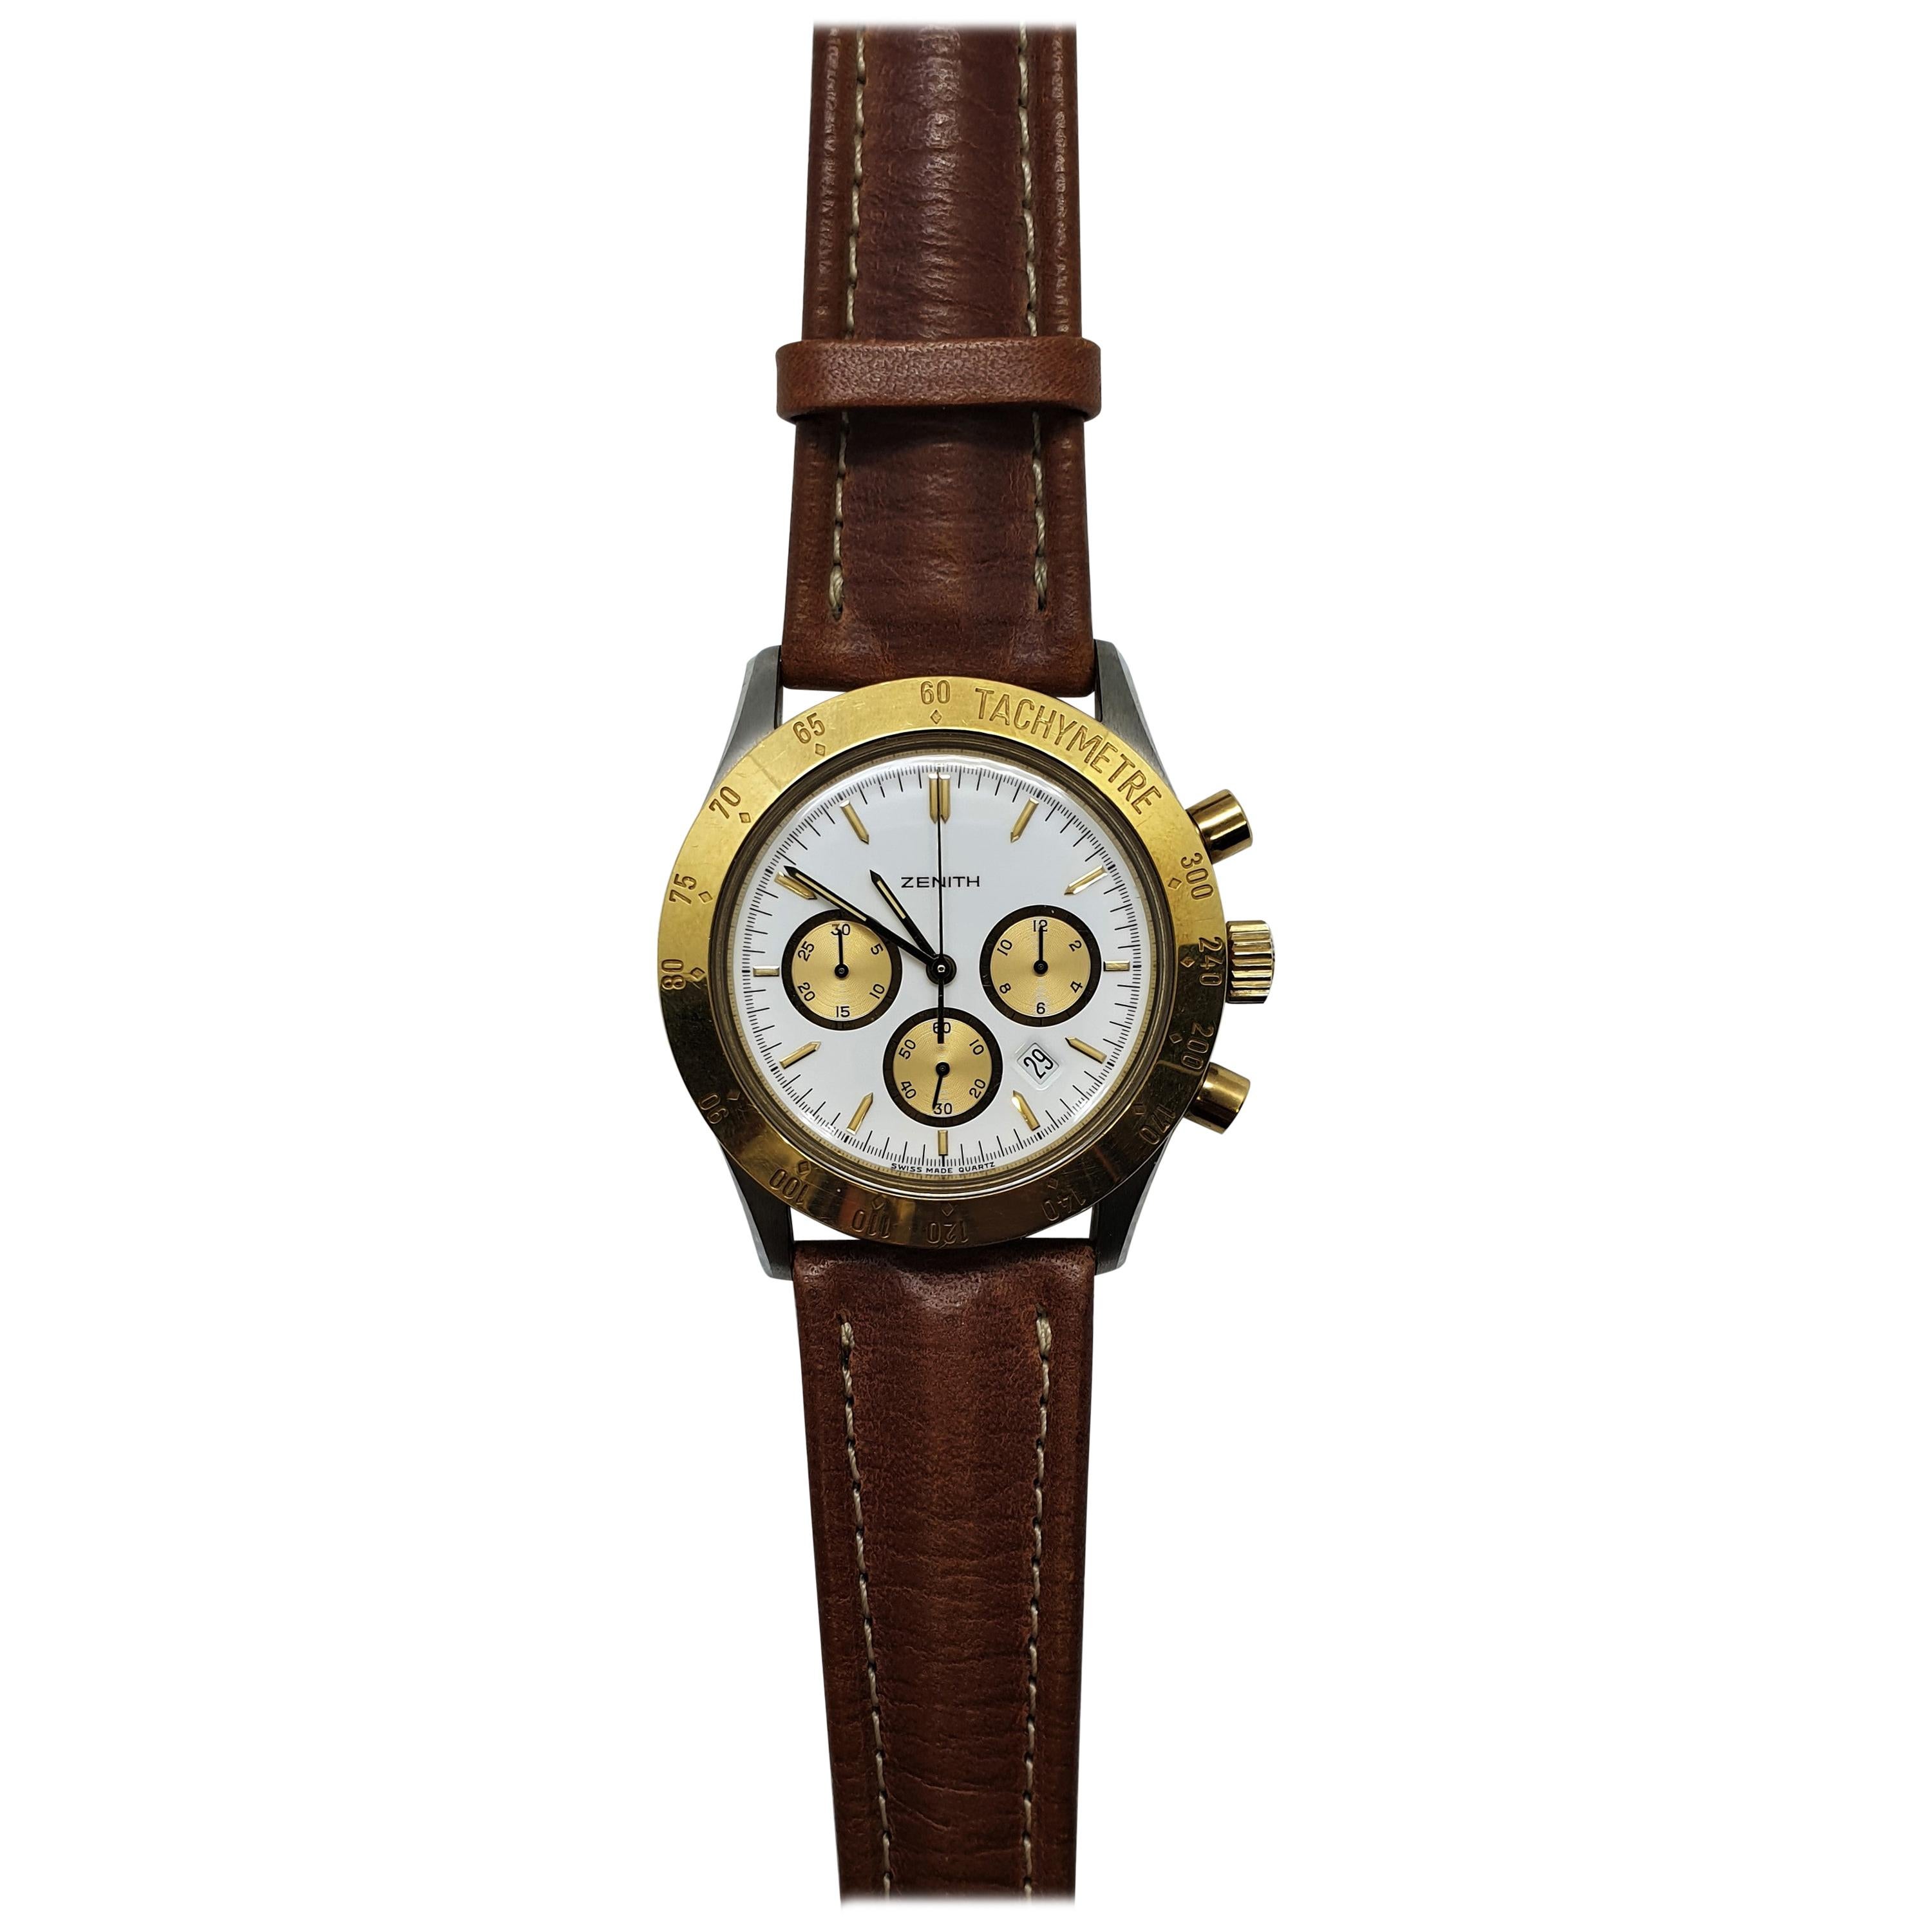 Zenith Steel and Gold Quartz Cronograph Wrist Watch Ref.38.0010.430, 1990s For Sale